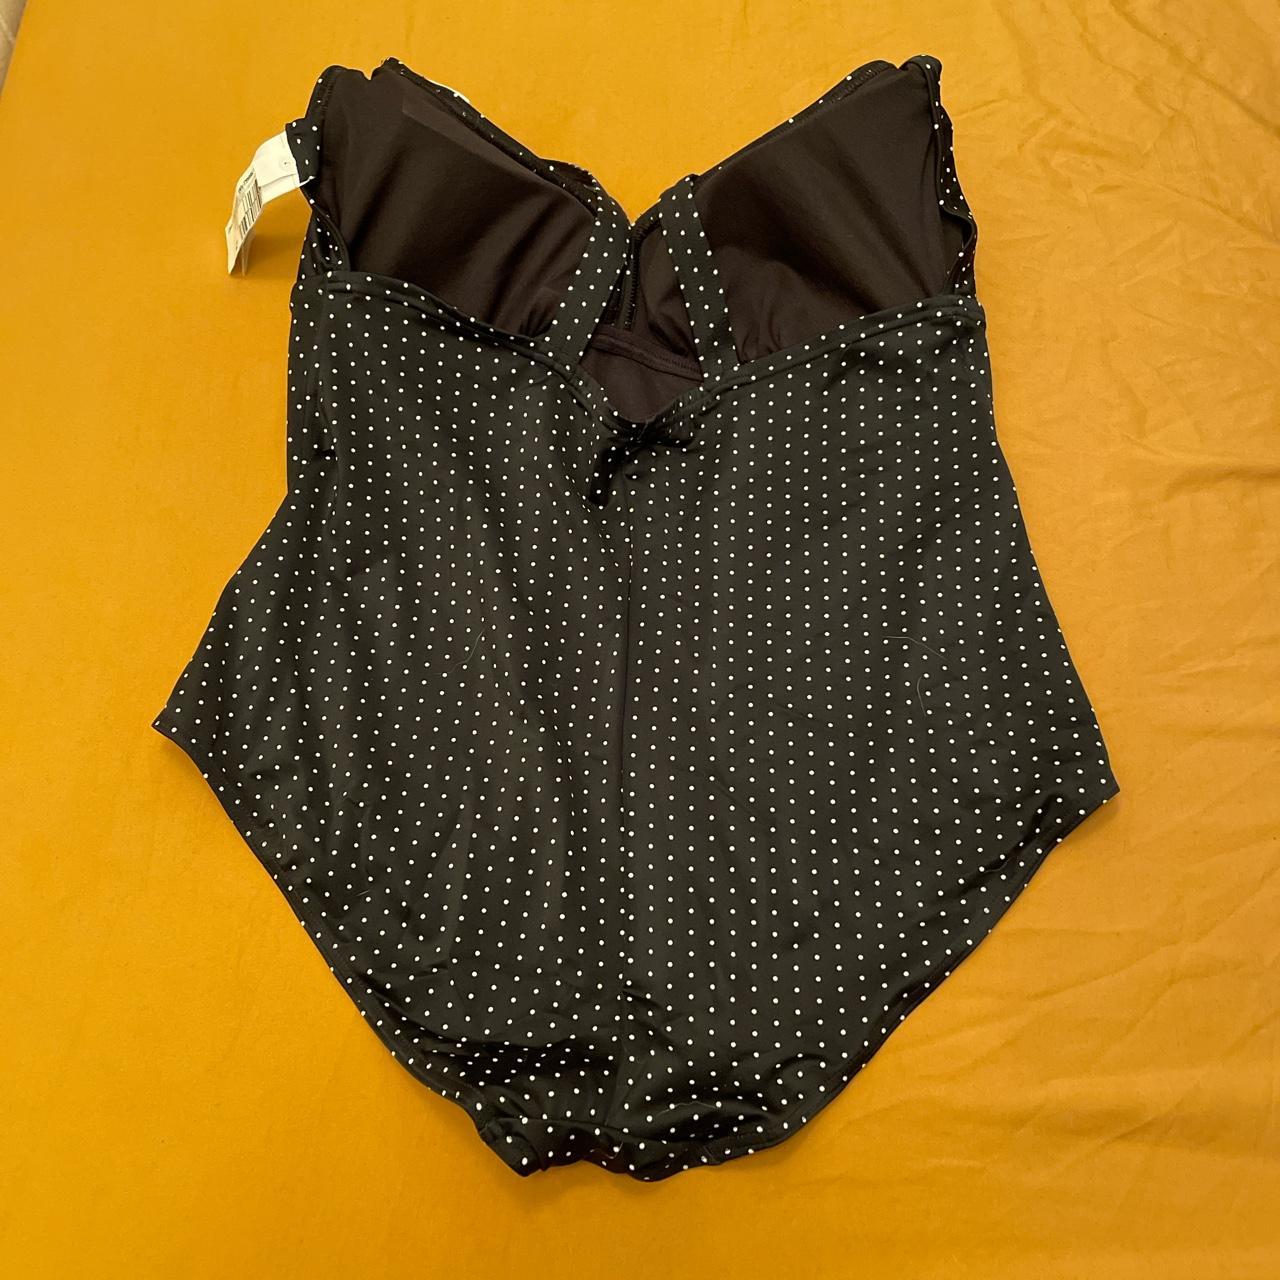 Product Image 4 - Black bathing suit with white